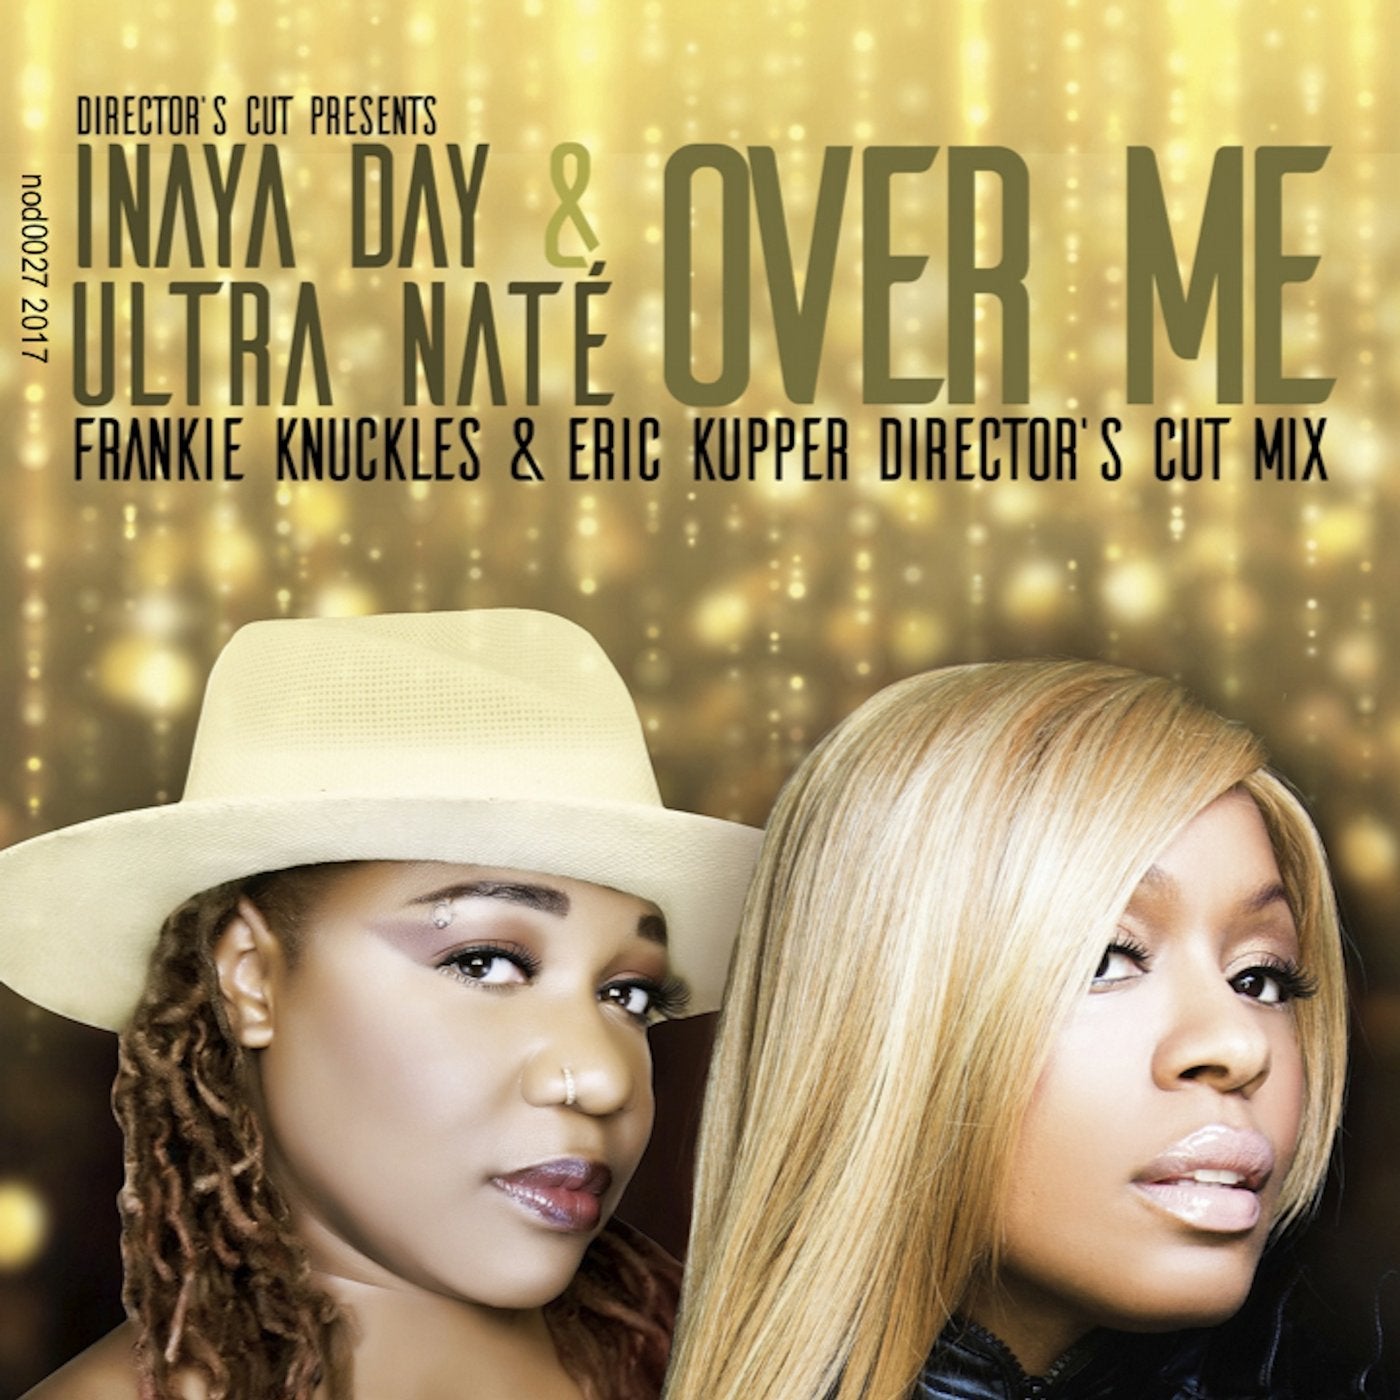 Over Me (Frankie Knuckles & Eric Kupper Director's Cut Mix) [Radio Edit]